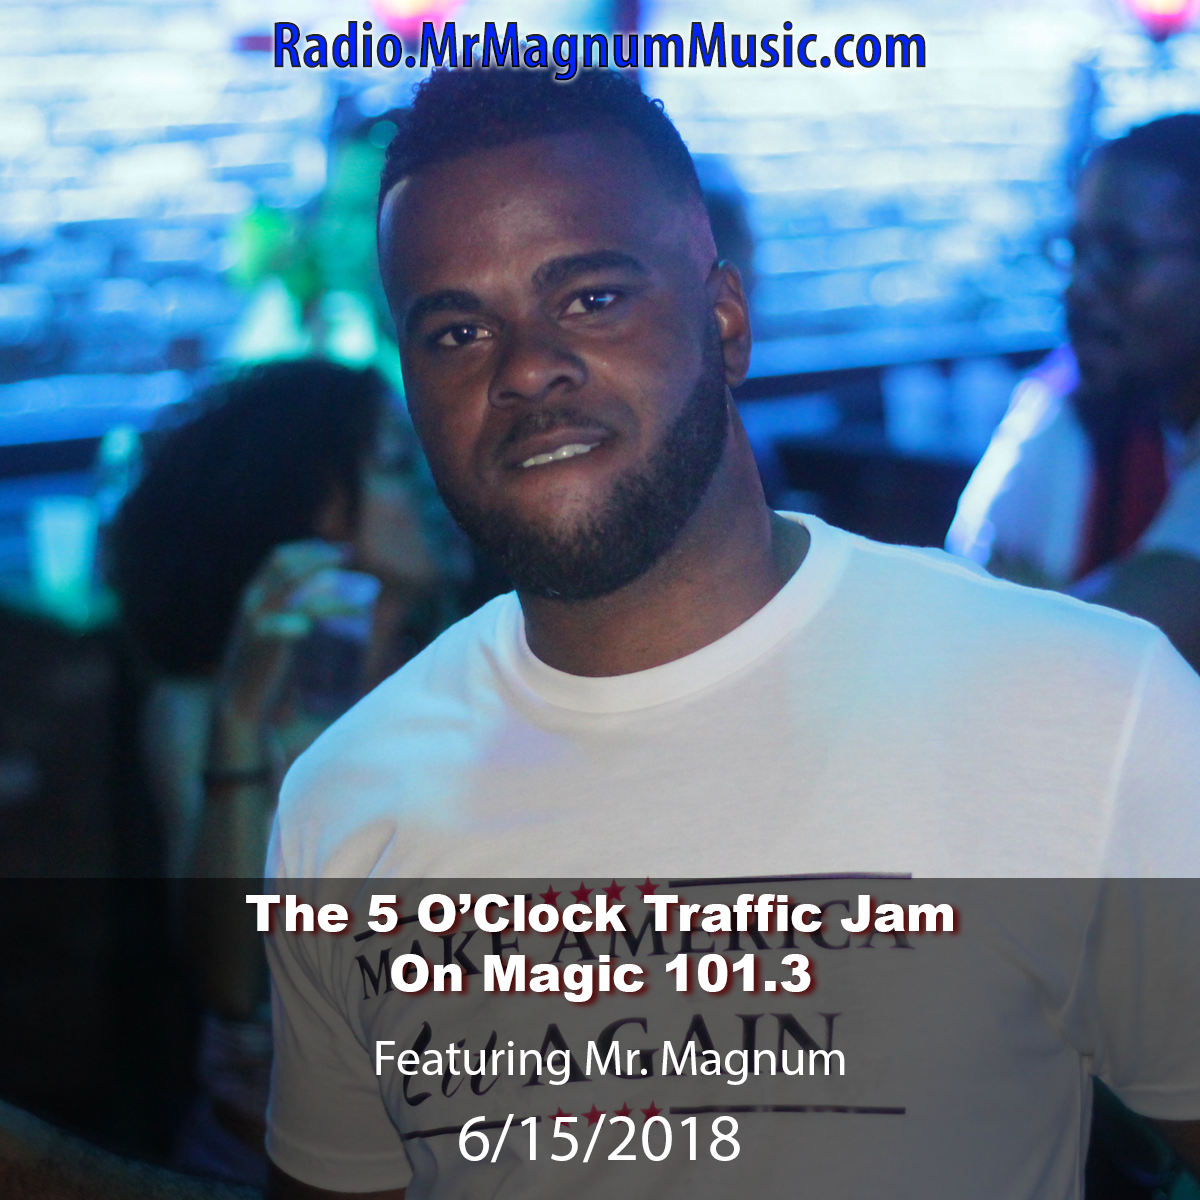 The 5 O'Clock Traffic Jam 20180615 featuring Gainesville's #1 DJ, Mr. Magnum on Magic 101.3